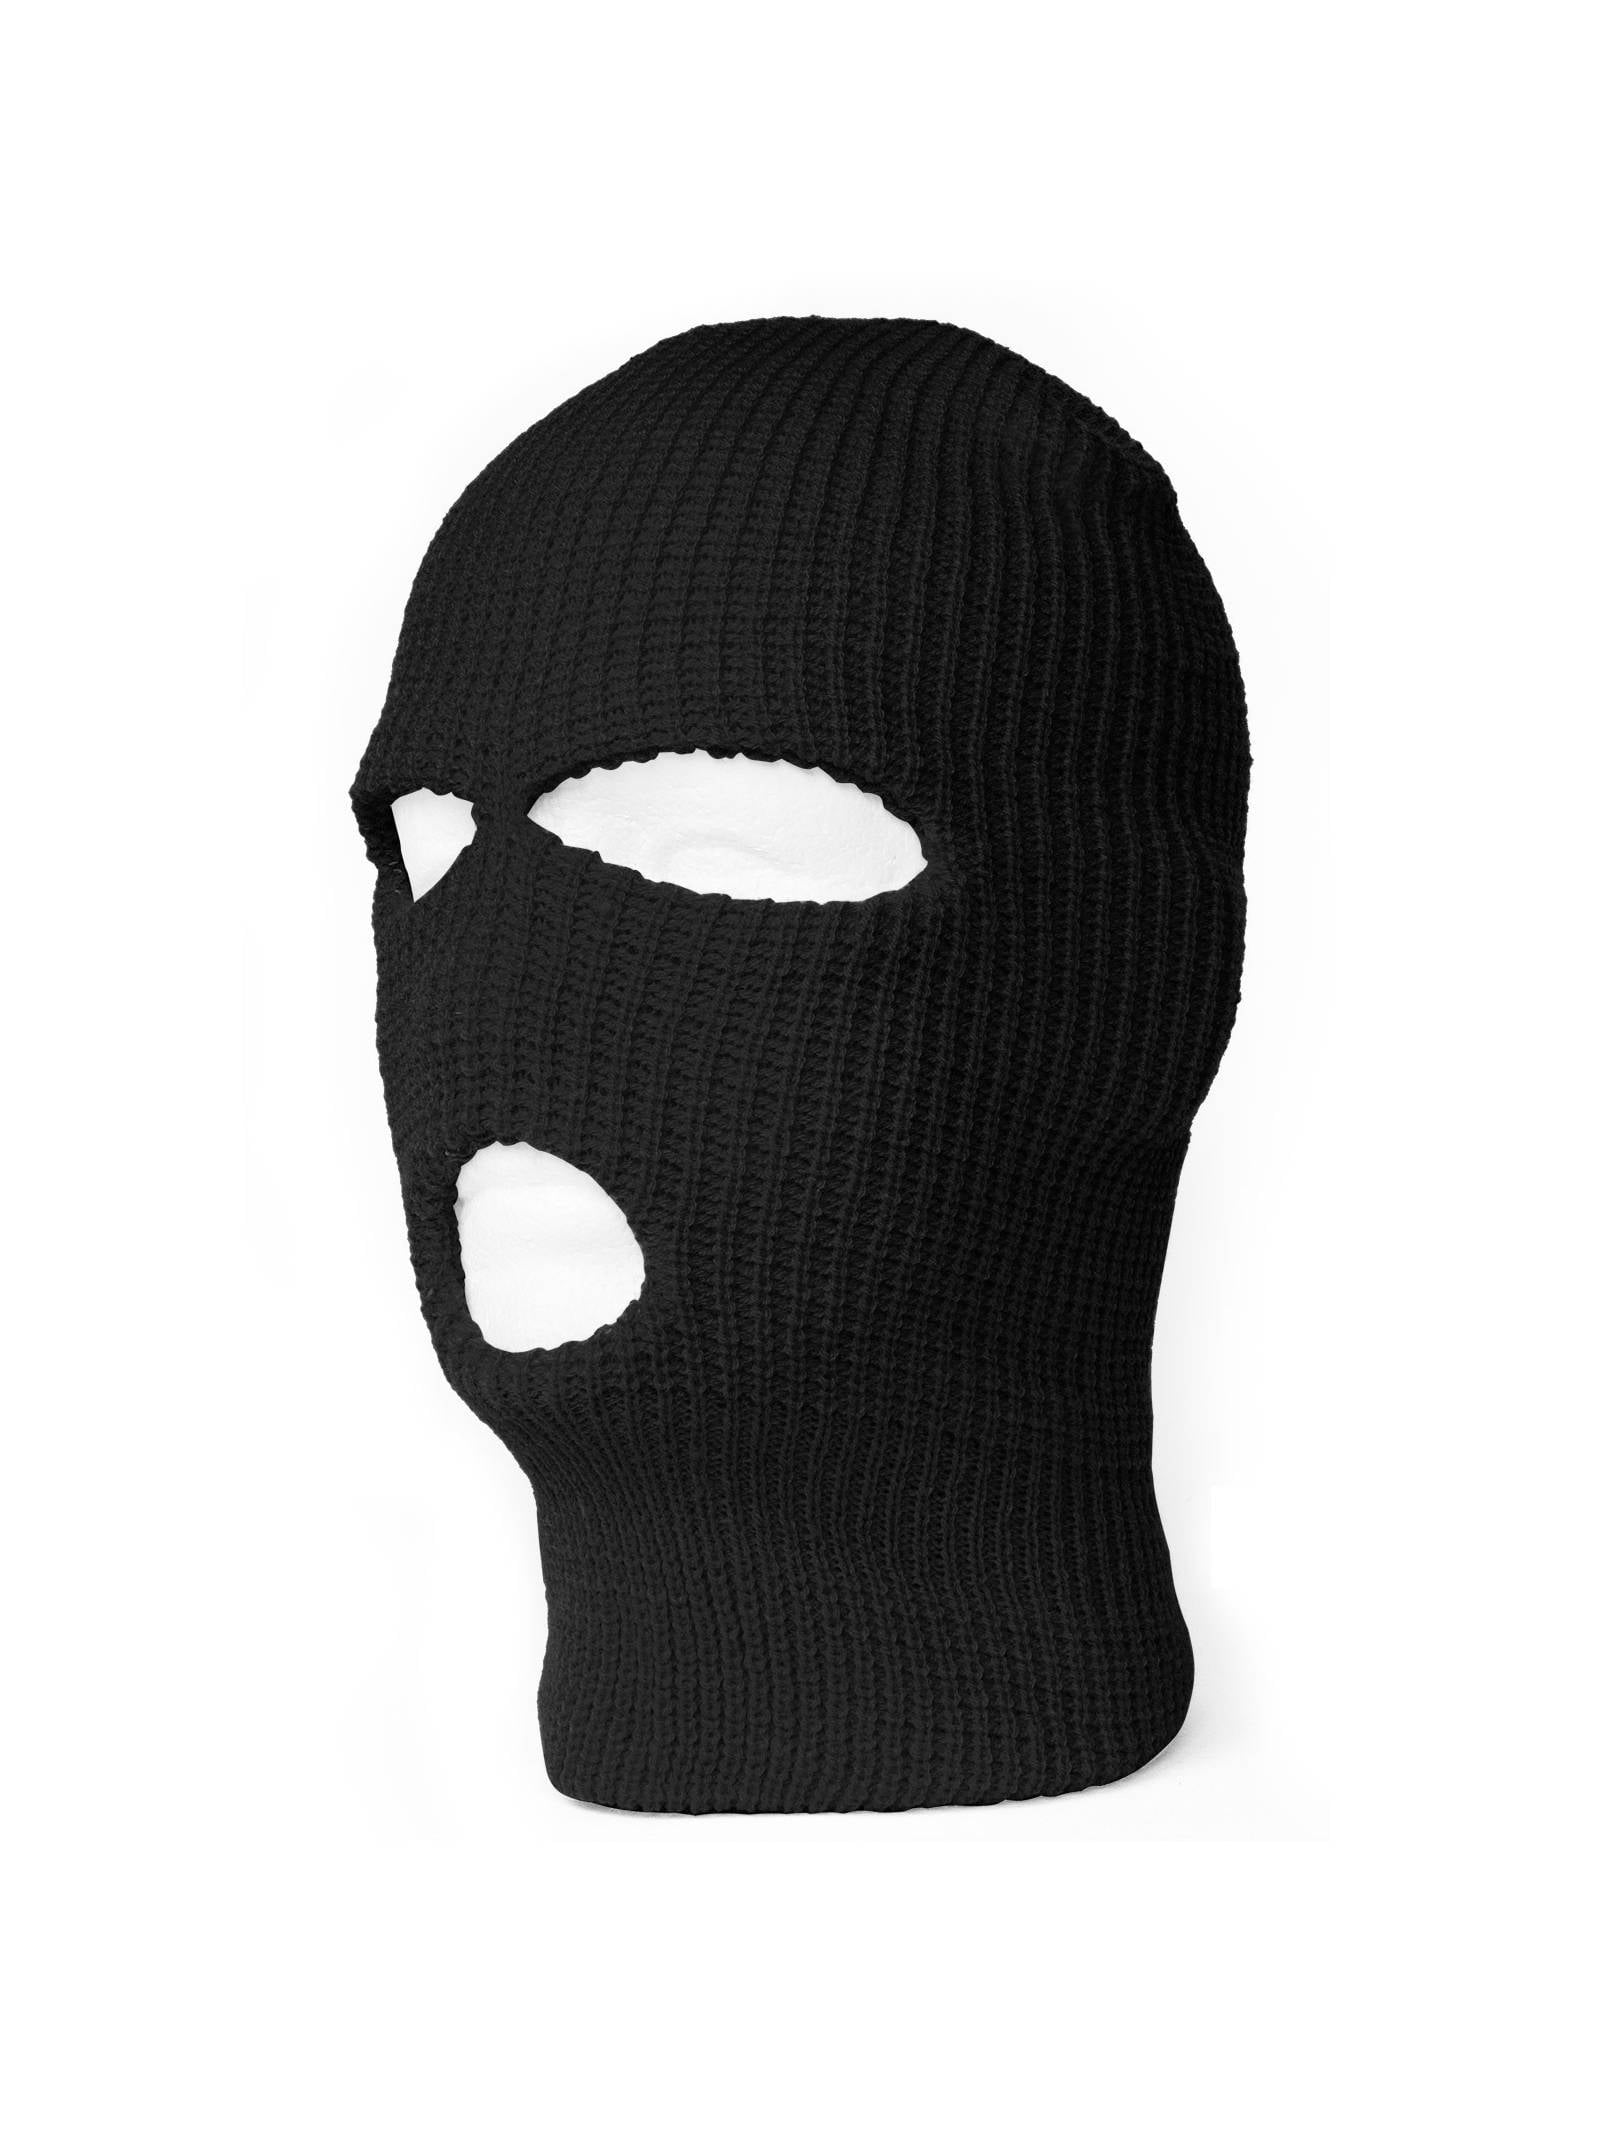 TopHeadwear 3 Hole Ski Mask - Black